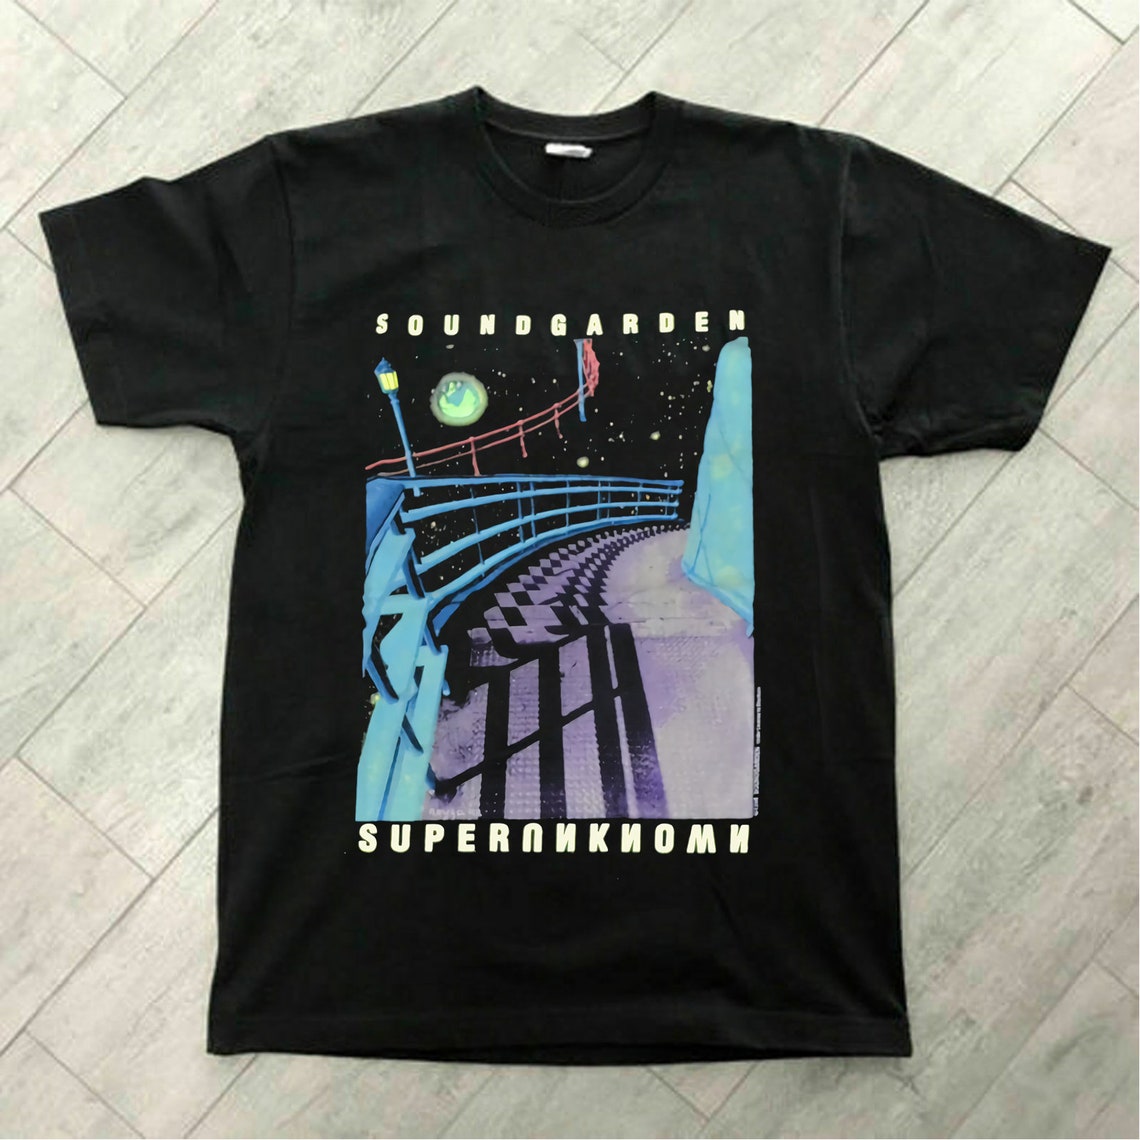 Soundgarden Superunknown T-shirt 1994 Vtg Black T Shirt - Etsy